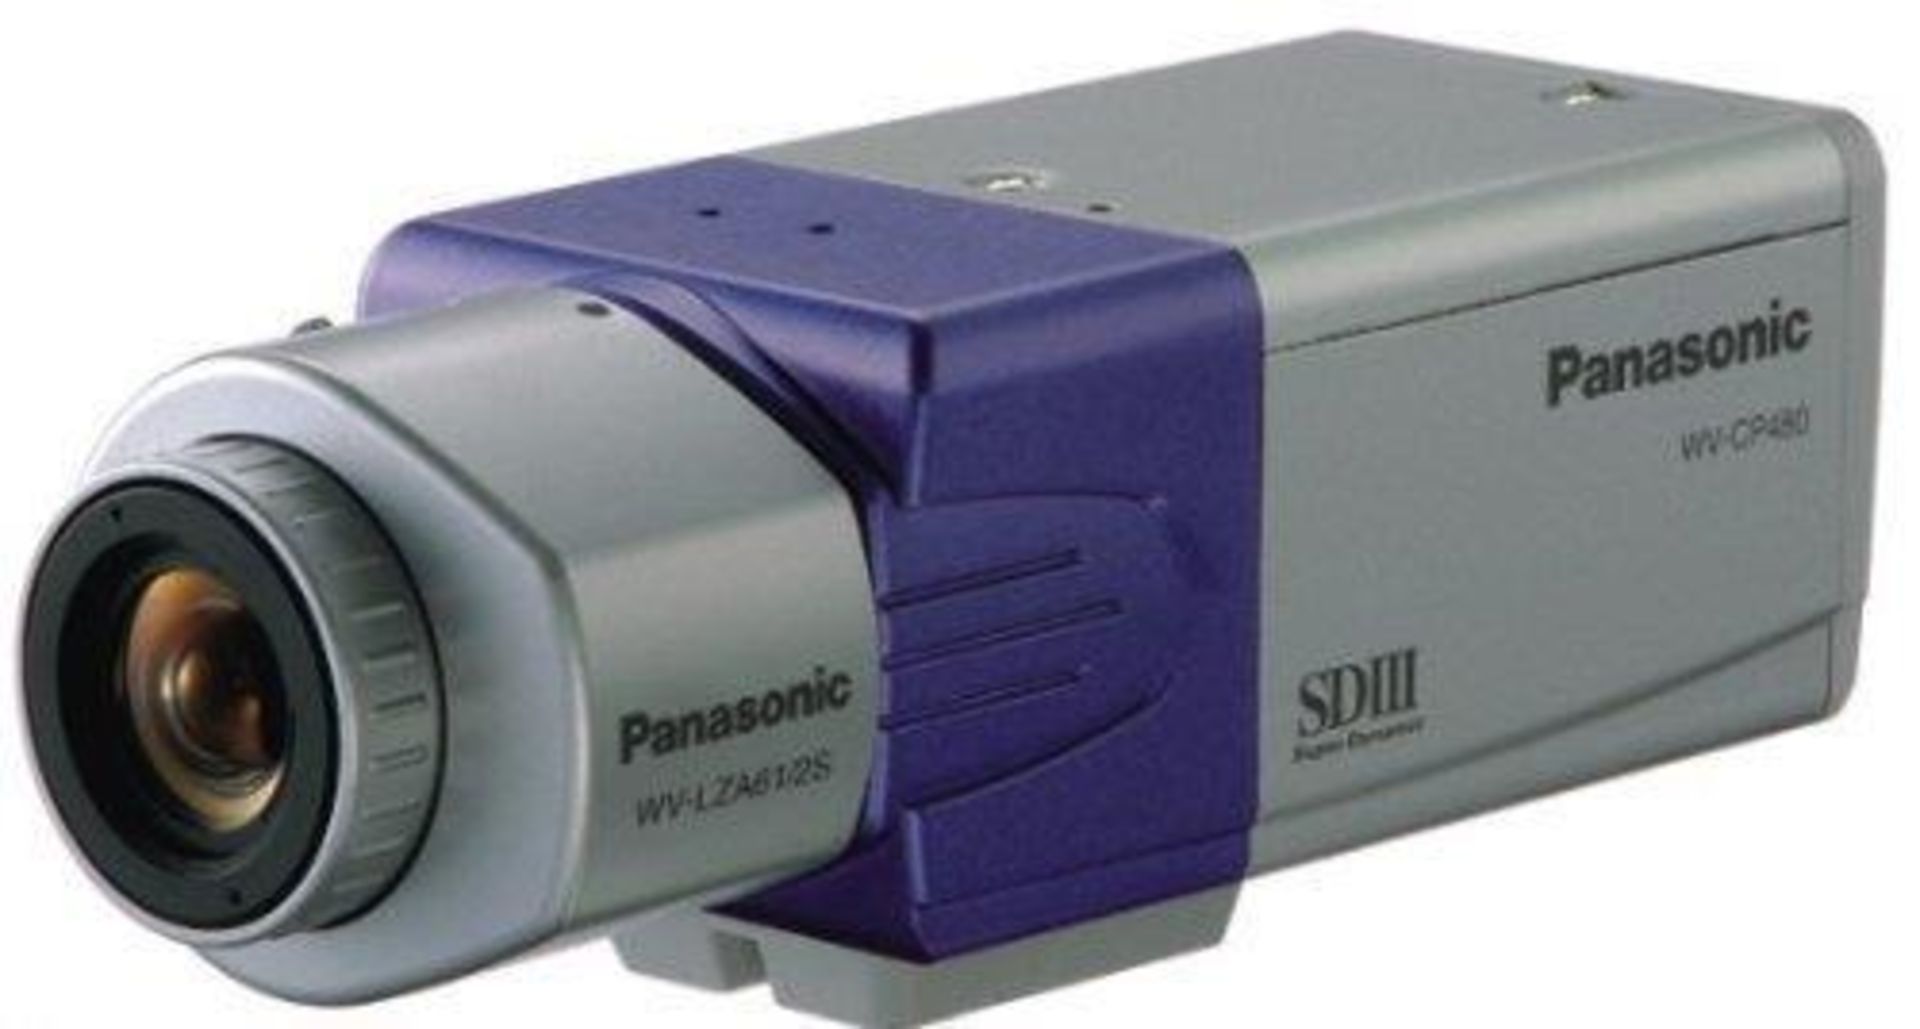 Panasonic CCTV Camera wv-cp480/g Super Dynamic III Day-Night Camera